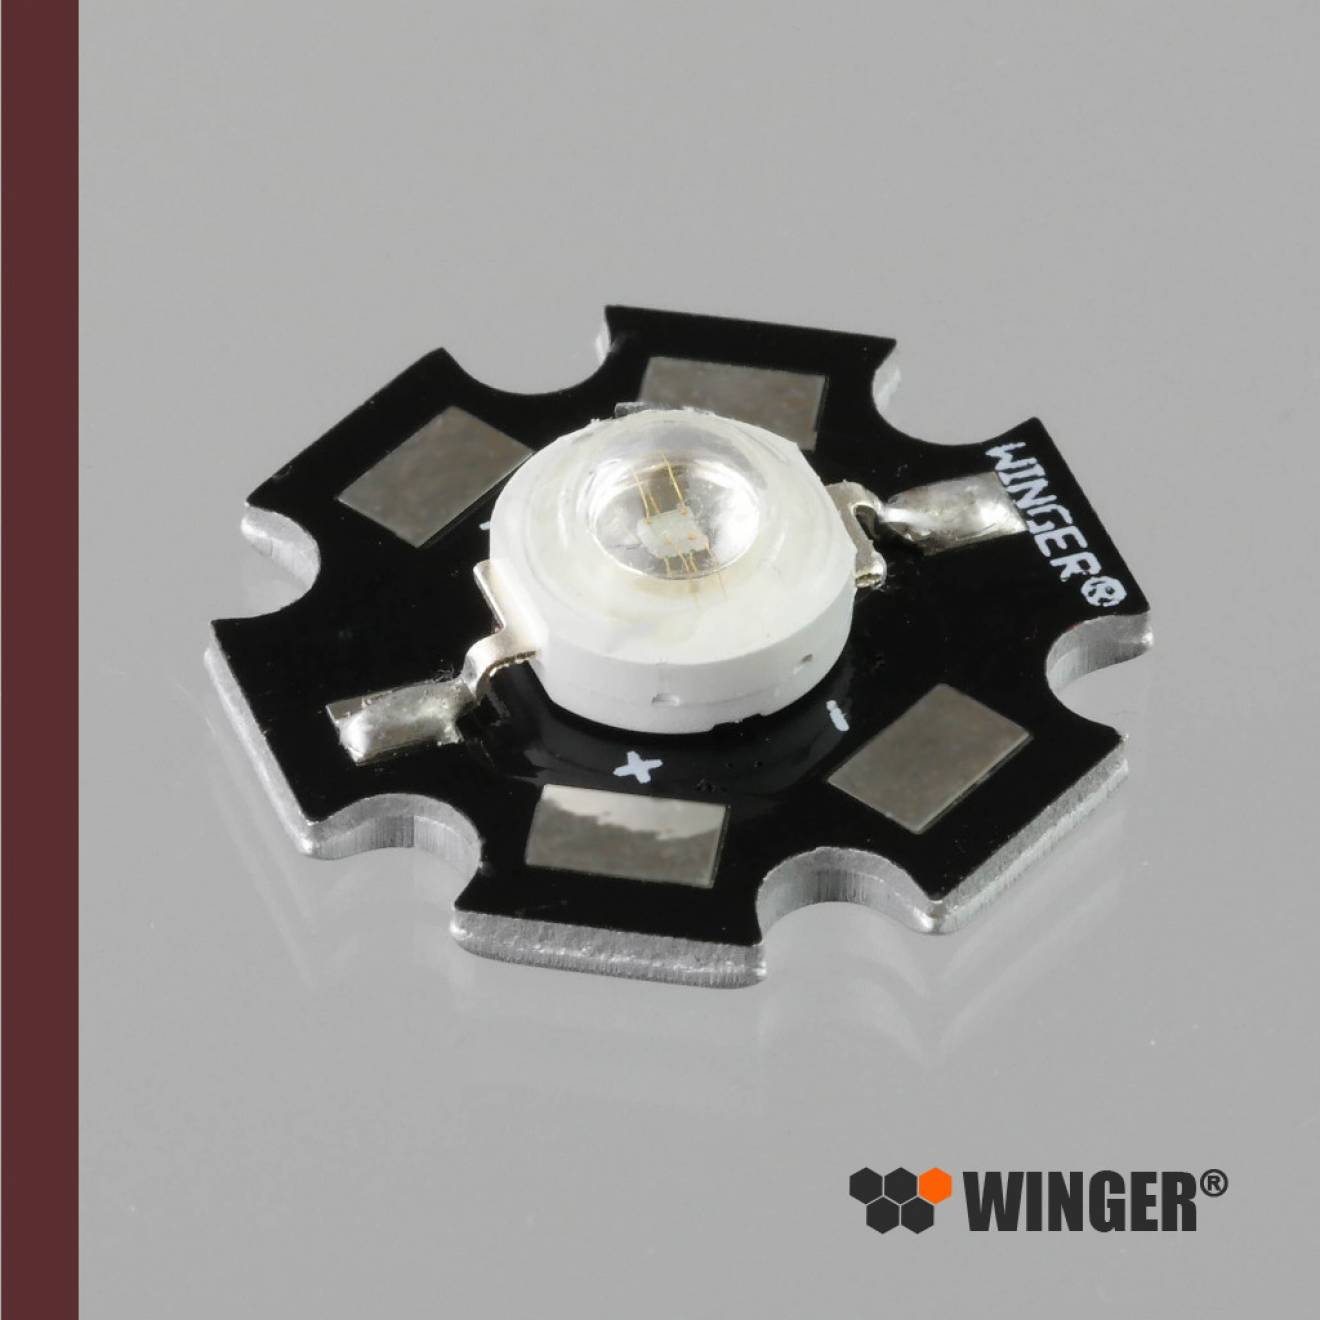 WINGER® WEPIR3-S2 IR Power LED Star infrarot (940nm) 3W